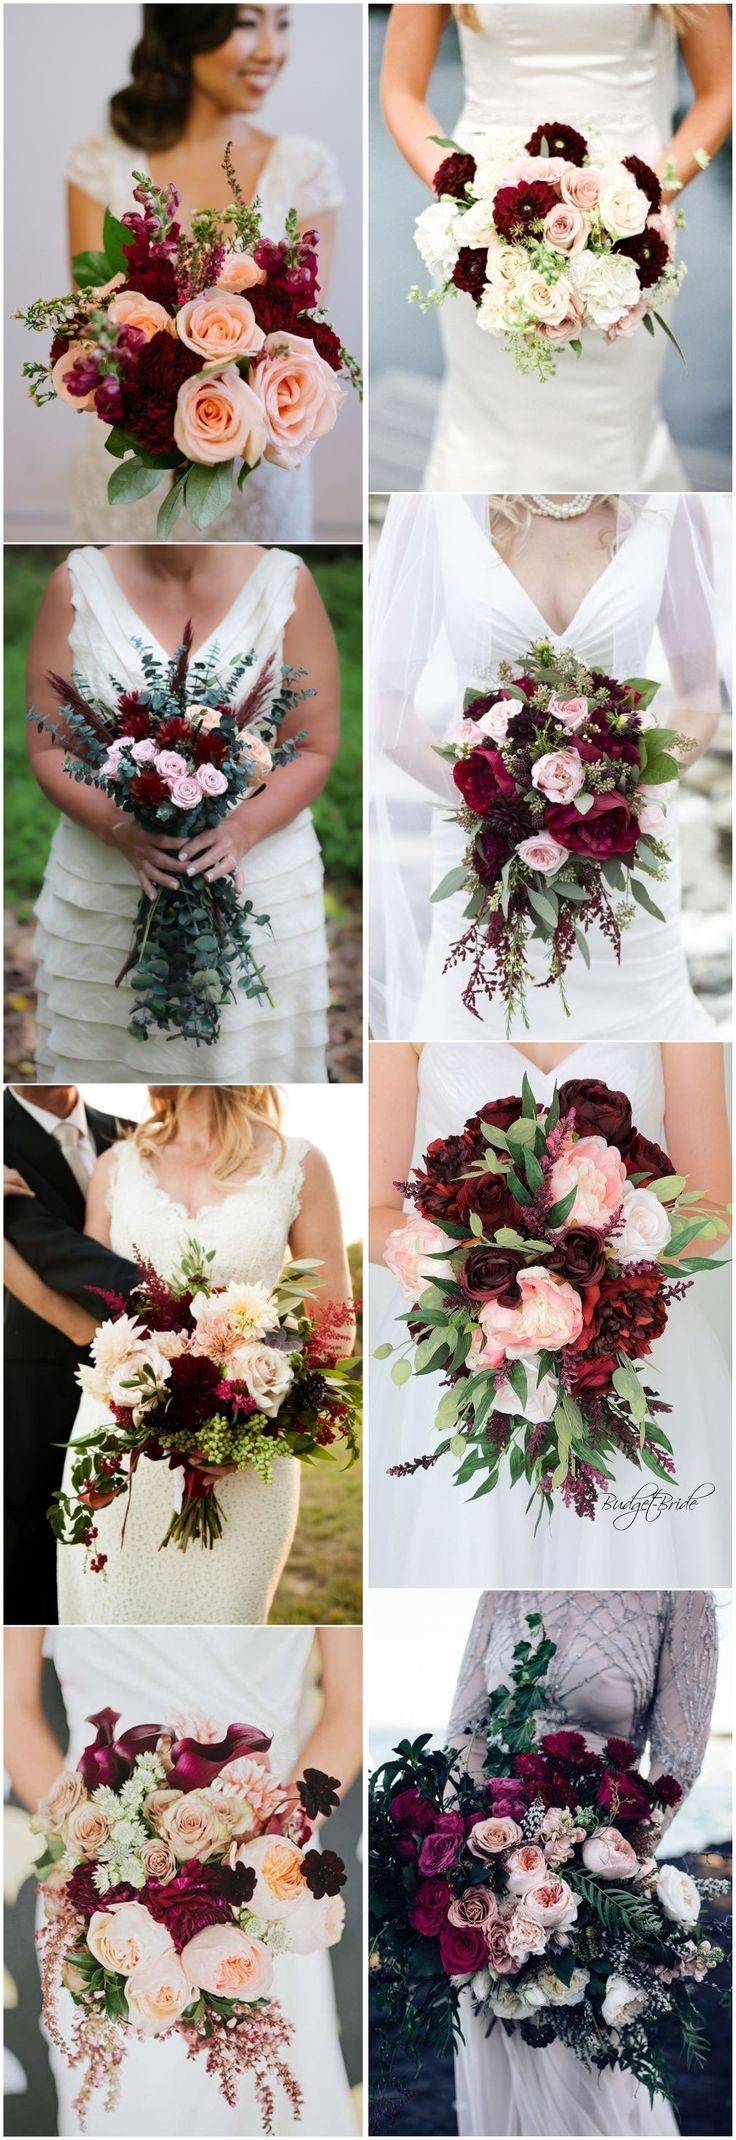 16 Elegant Burgundy and Blush Wedding Bouquet Ideas -   11 wedding Burgundy bouquet ideas